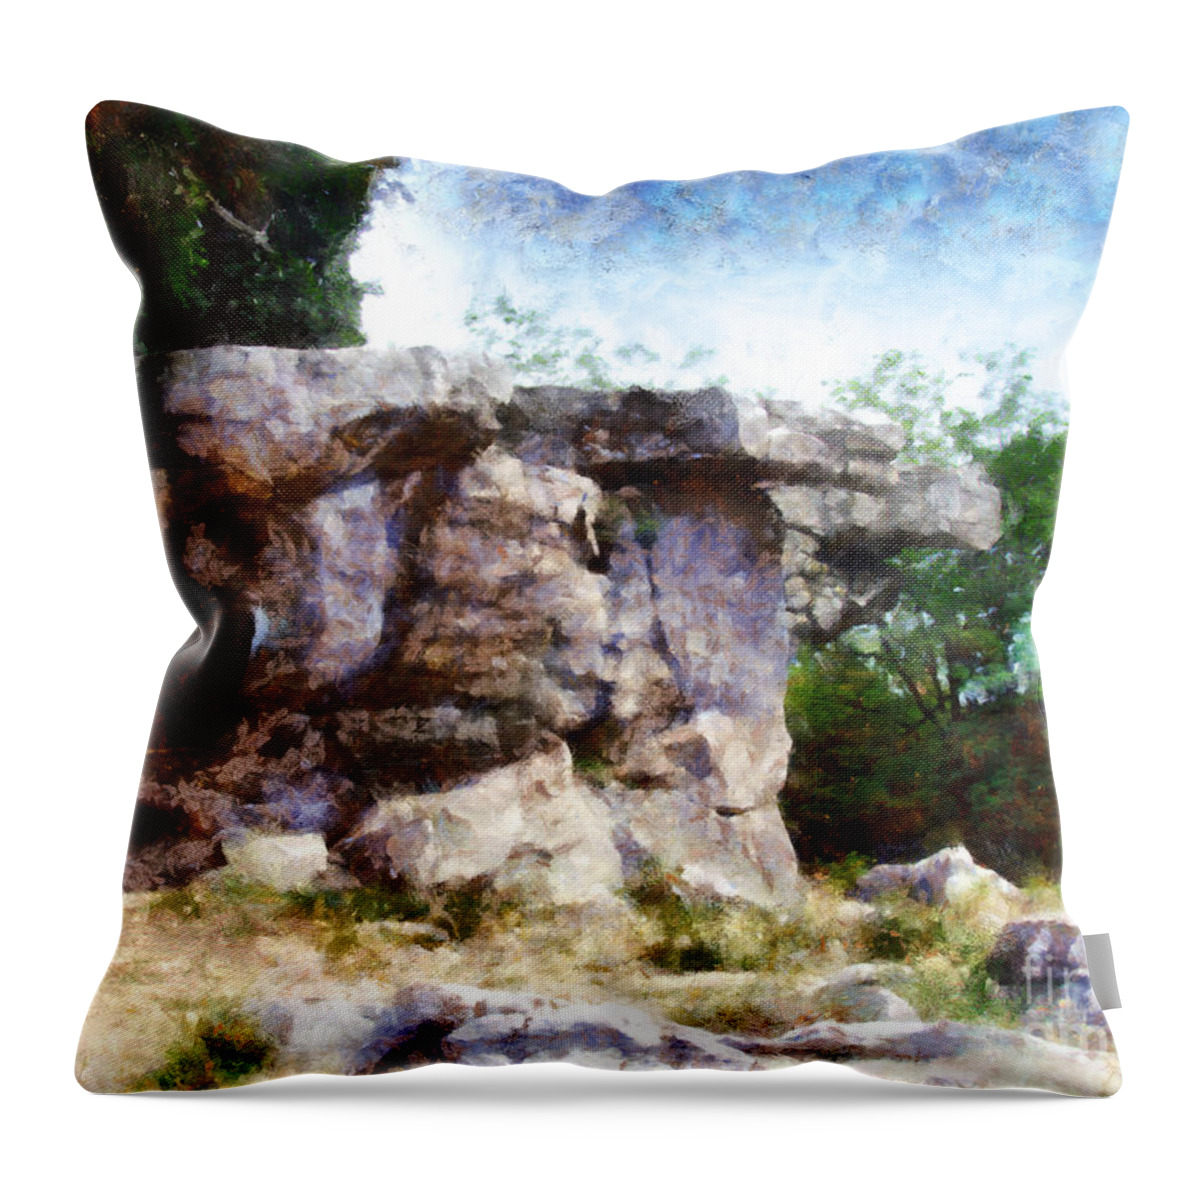 Landscape Throw Pillow featuring the painting Stone Sea no.2 by Alexa Szlavics